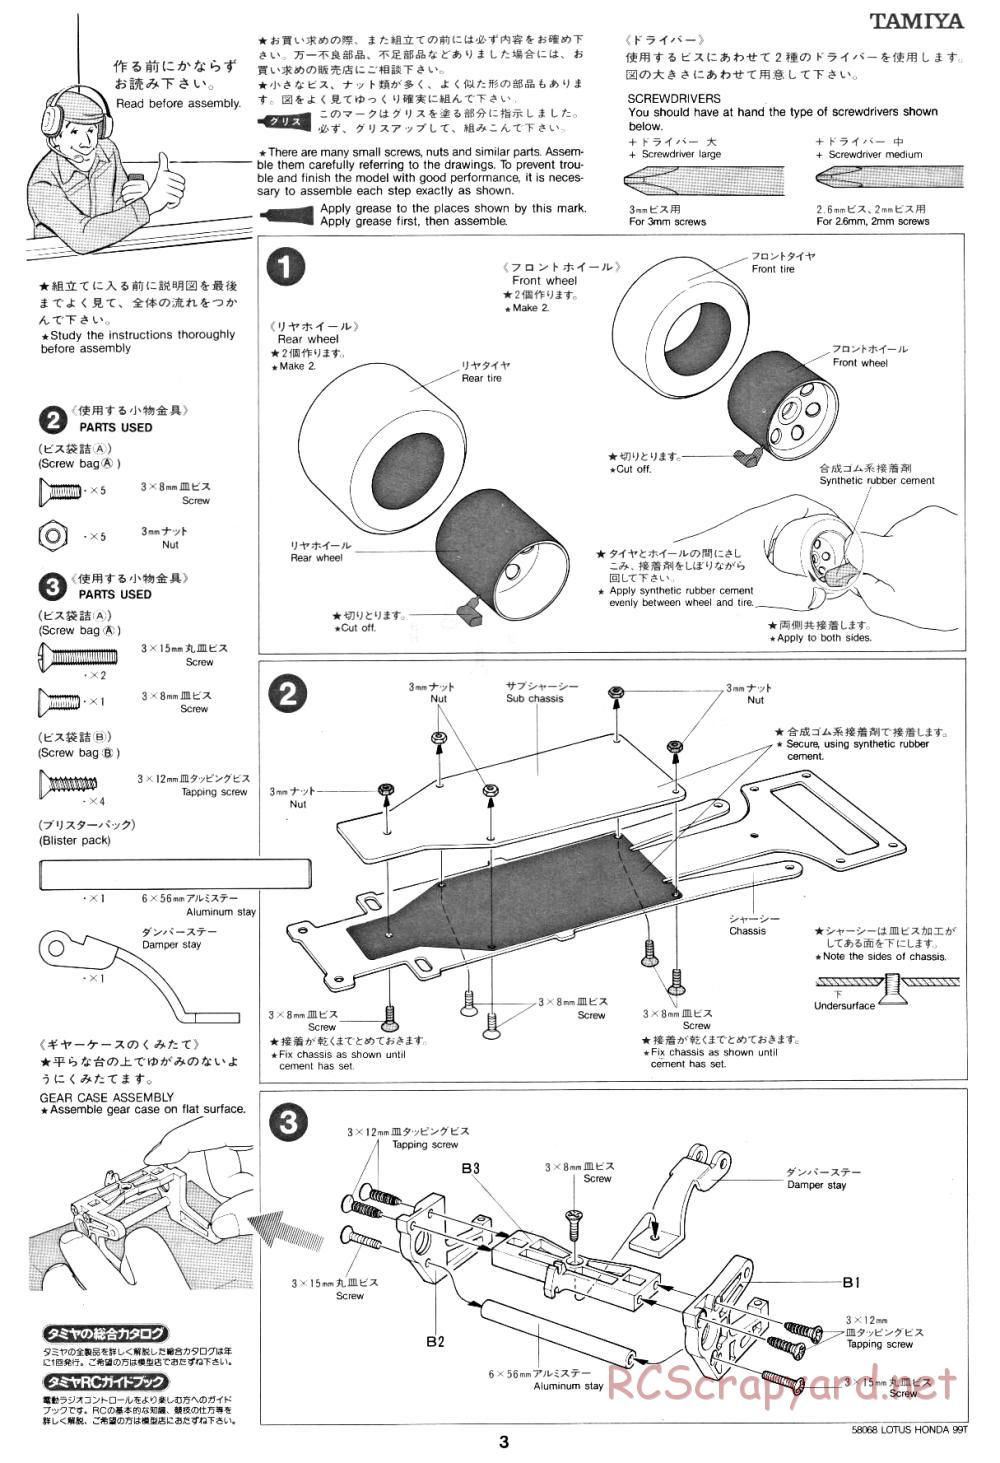 Tamiya - Lotus Honda 99T - 58068 - Manual - Page 3